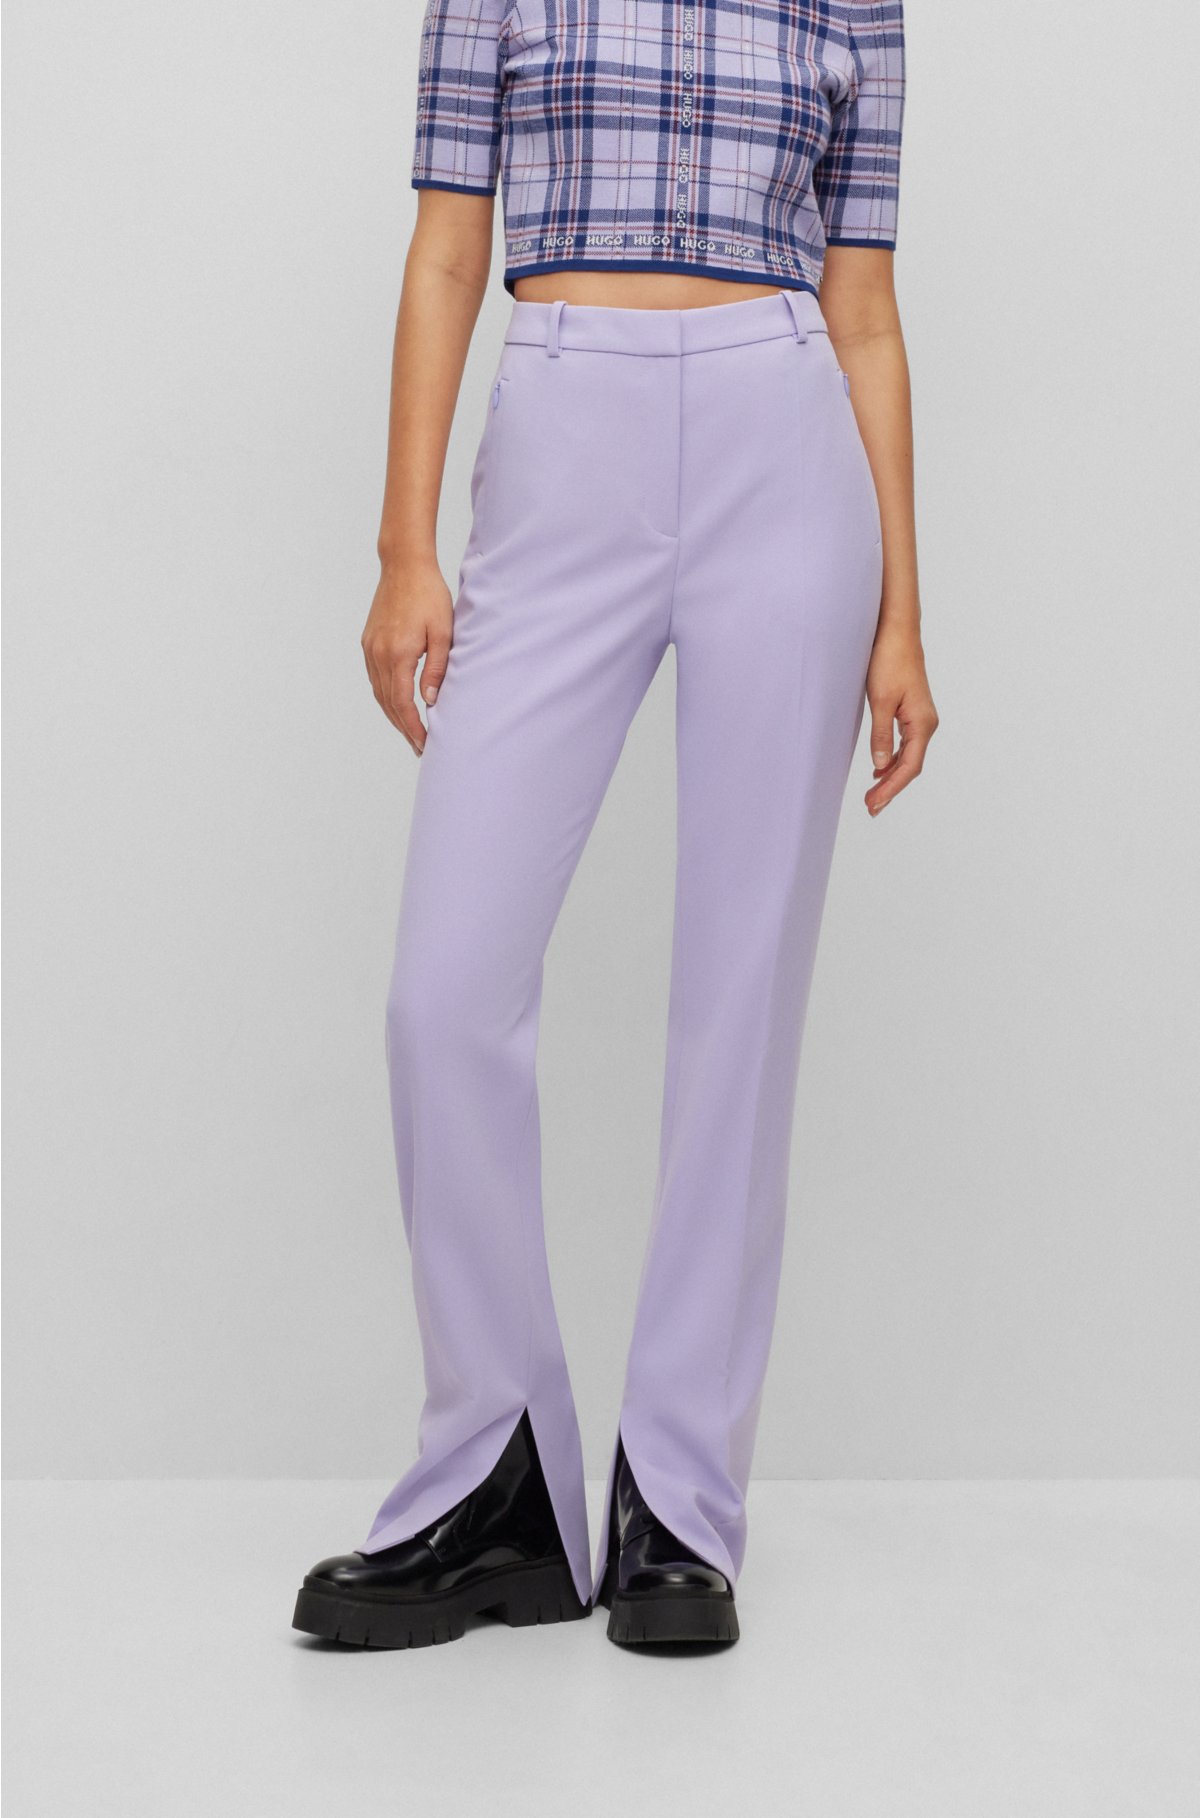 Purple, Grey, & White Elastic Belt